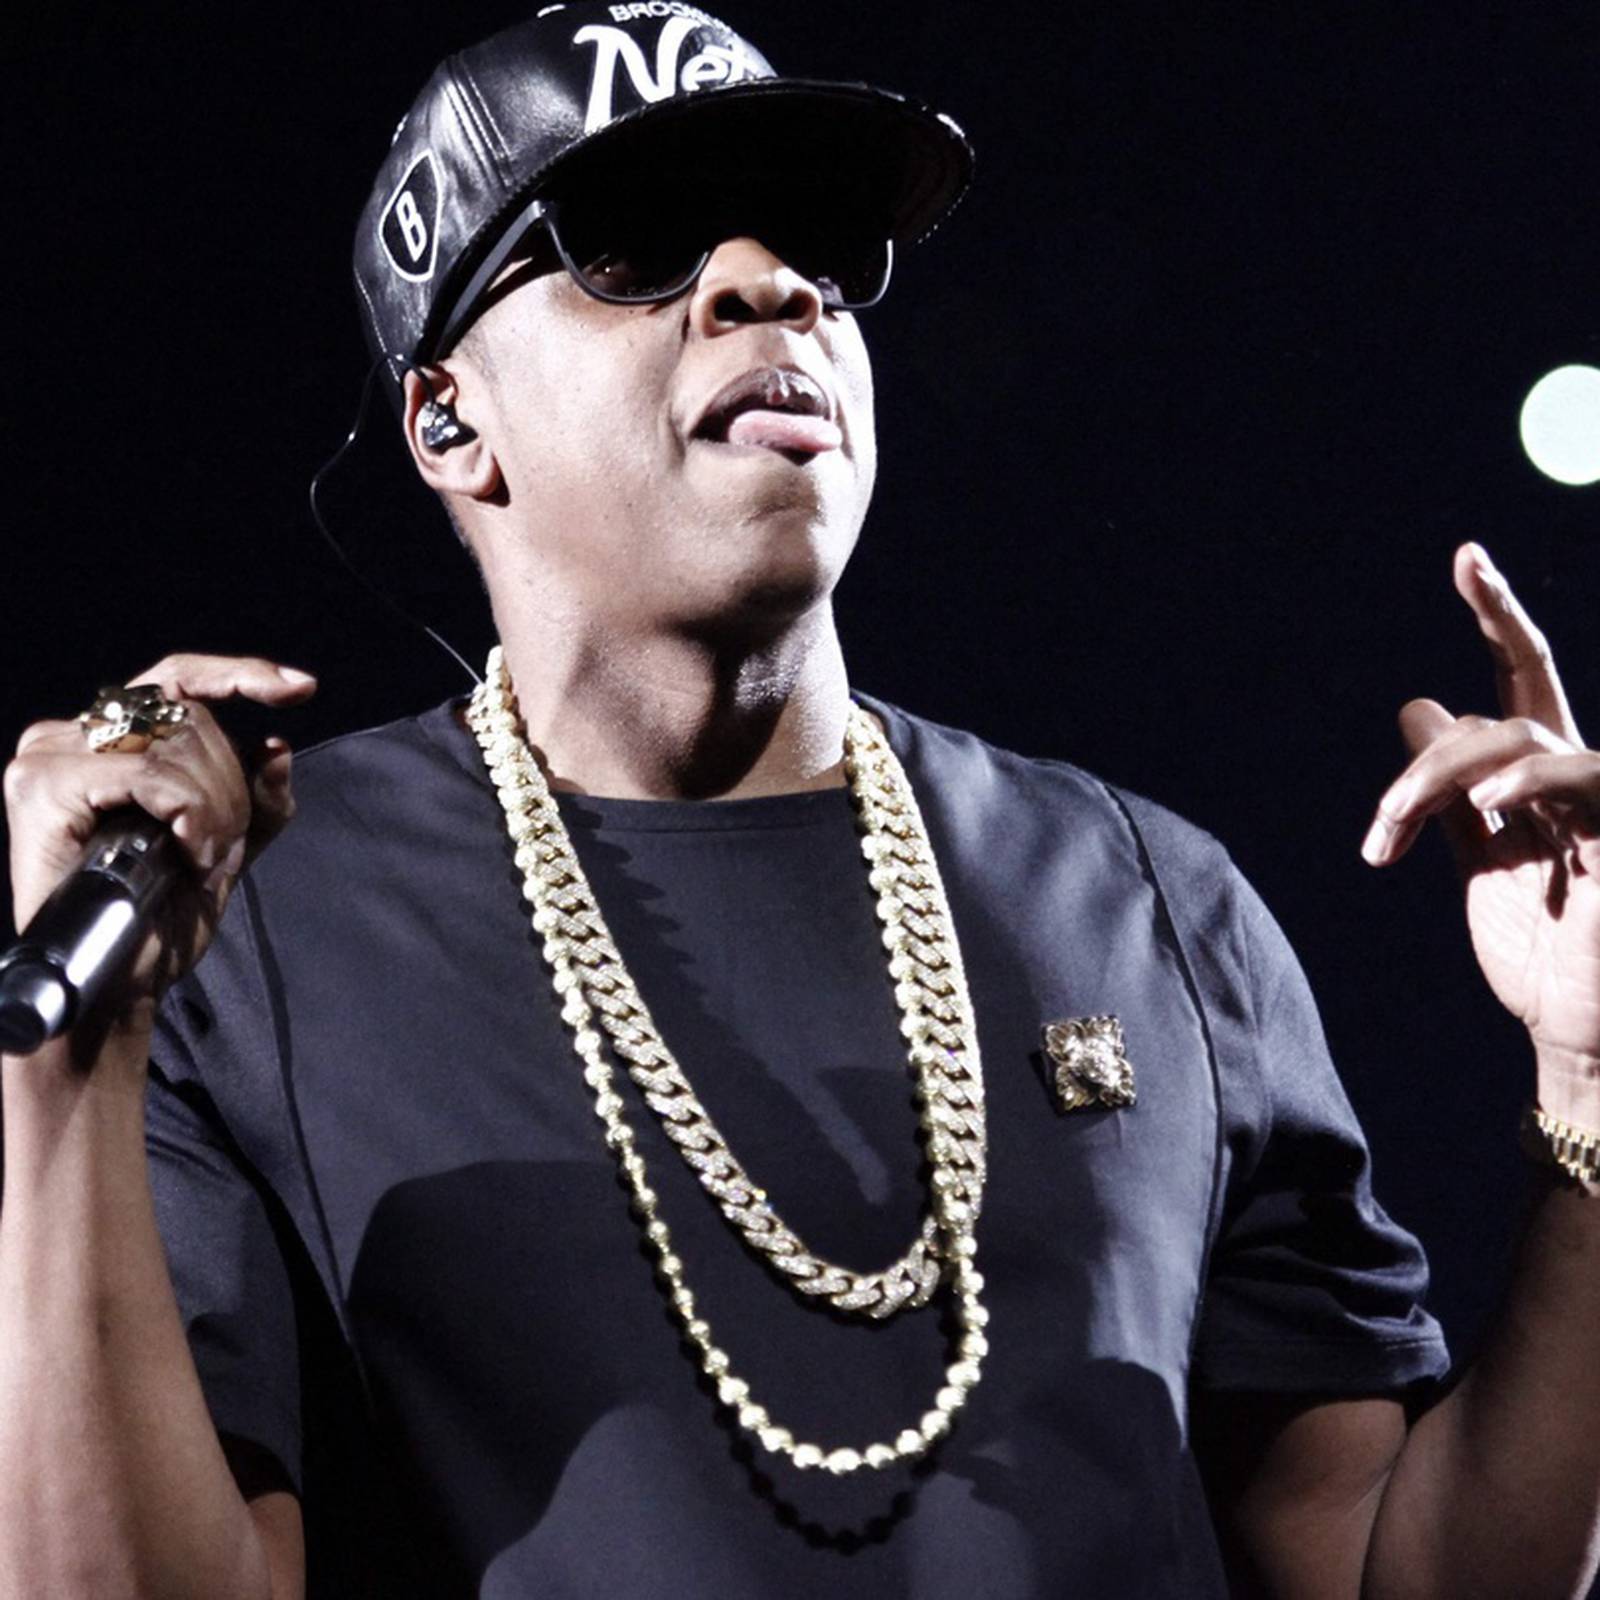 LVMH Buys 50% of Jay-Z's Champagne Brand Armand de Brignac